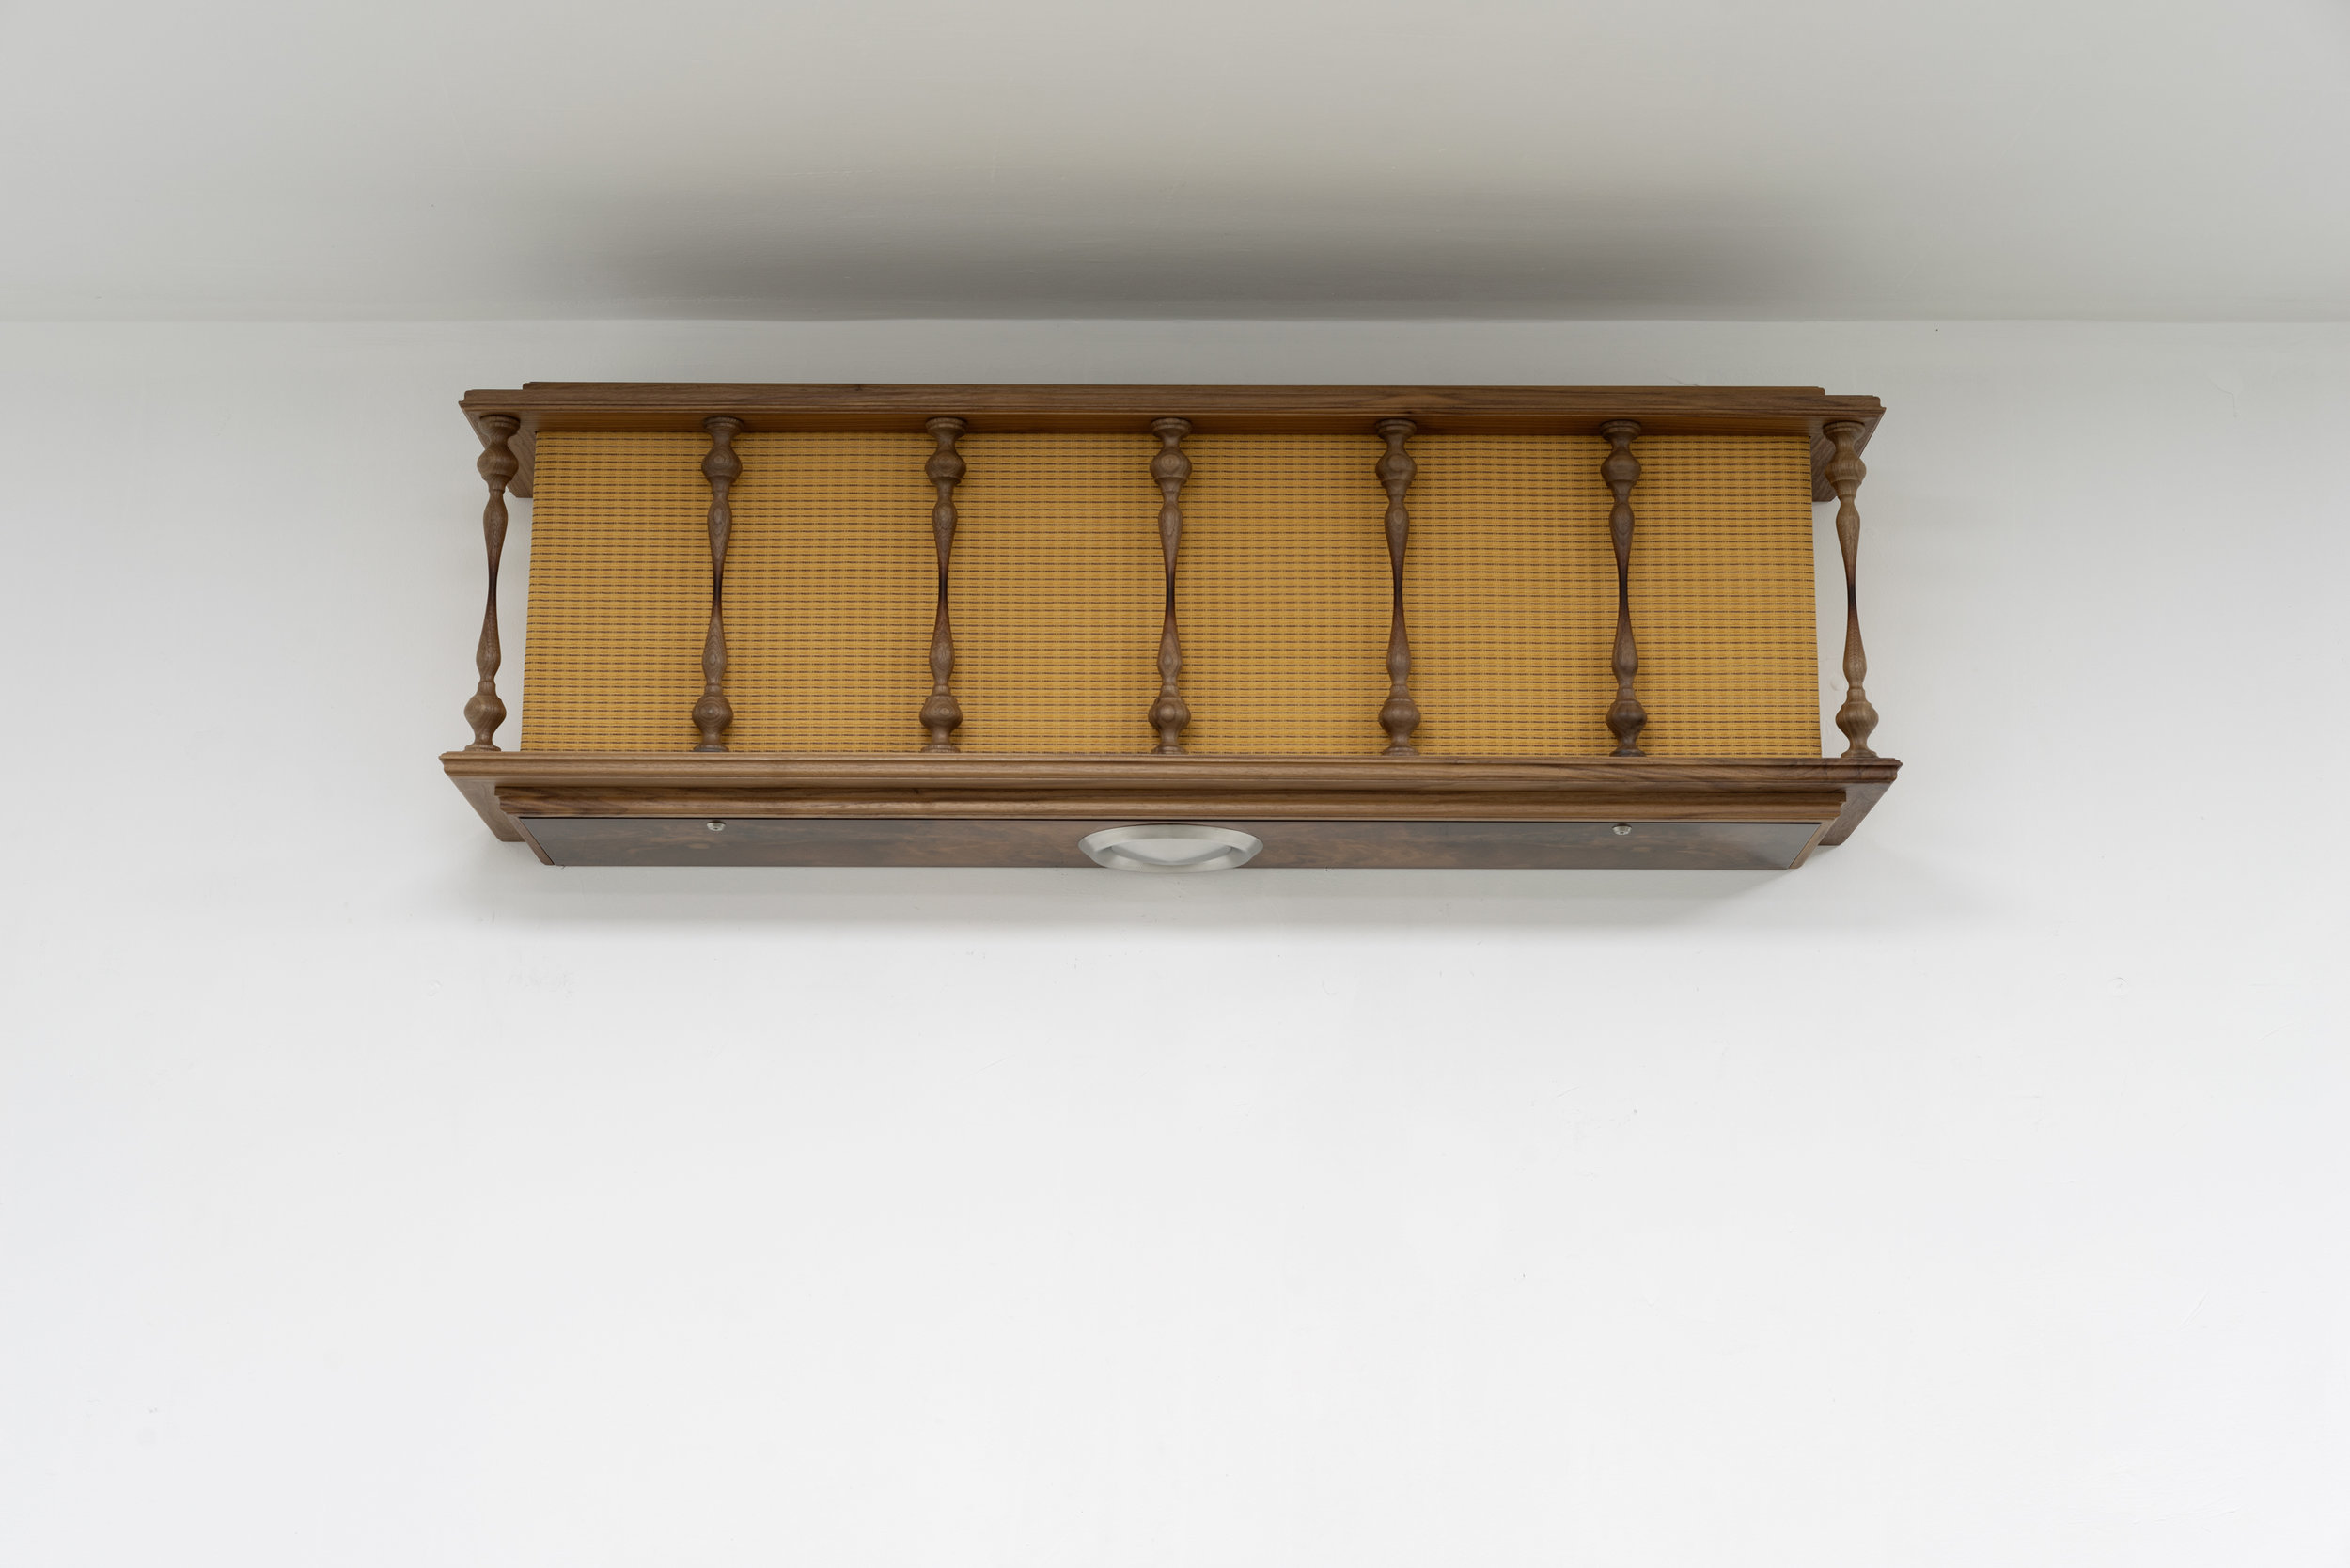  Philip Seibel,  Radiator (Columns),  2019, 106 x 32 x 21 cm, walnut wood, mdf, veneer, PUR paint, UP resin, speaker cloth, stainless steel vent cover, screws 